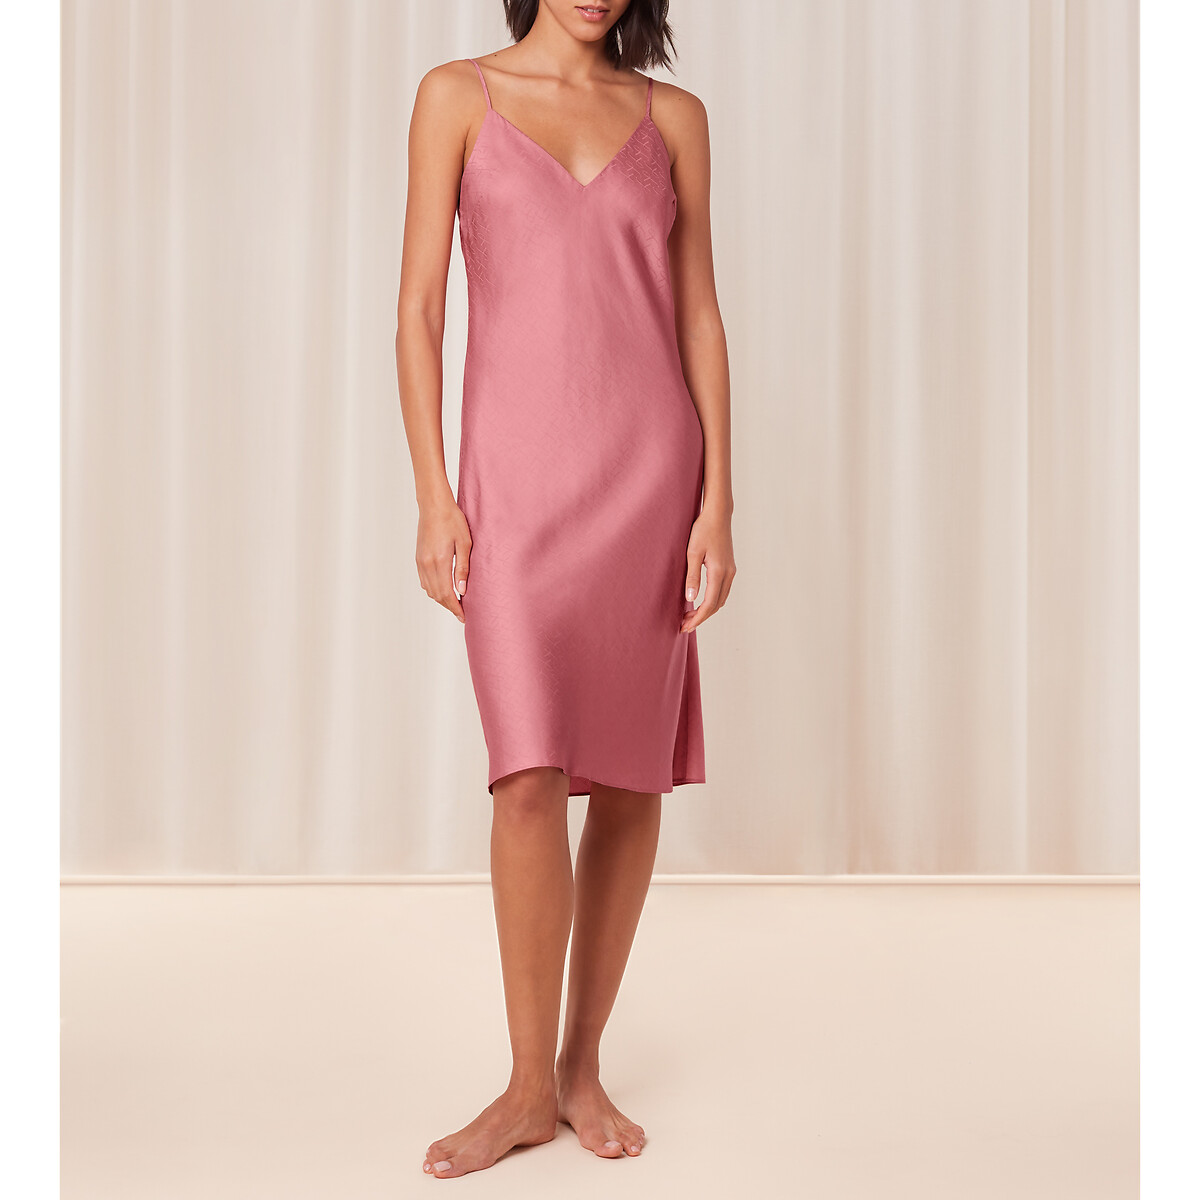 Triumph | bedruckt La rosa Redoute Nachthemd silky sensuality